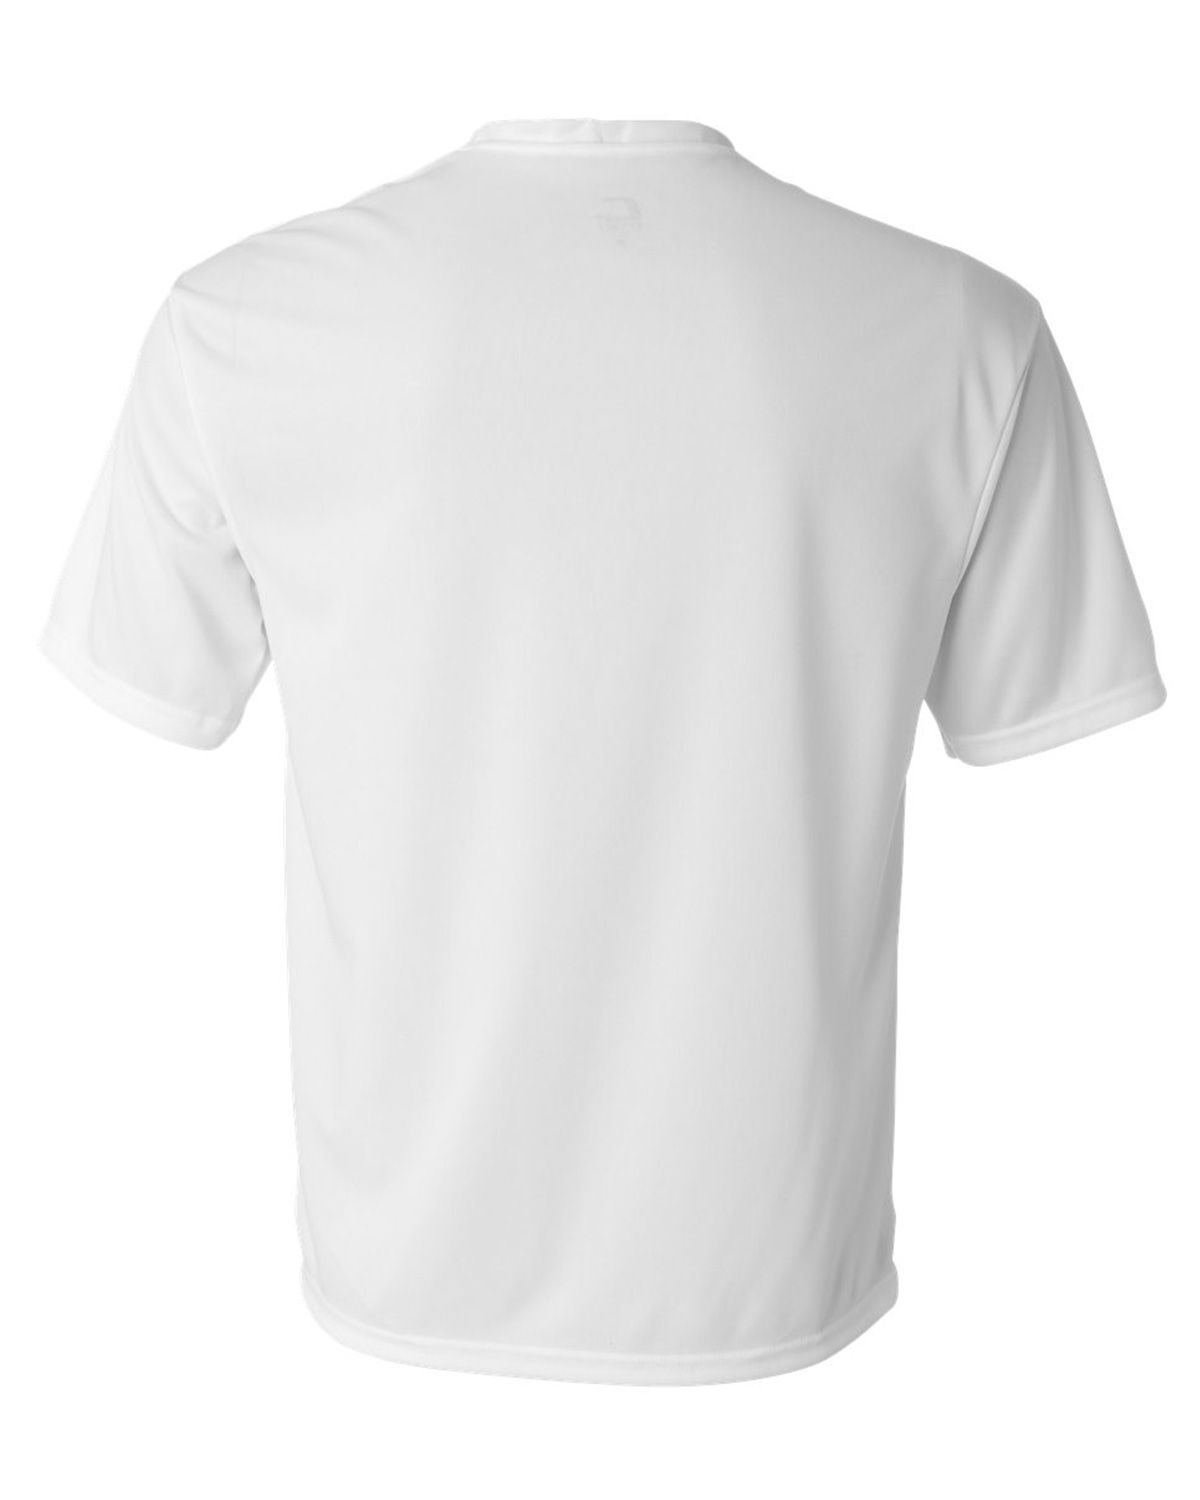 C2 Sport Mens Performance T-Shirt